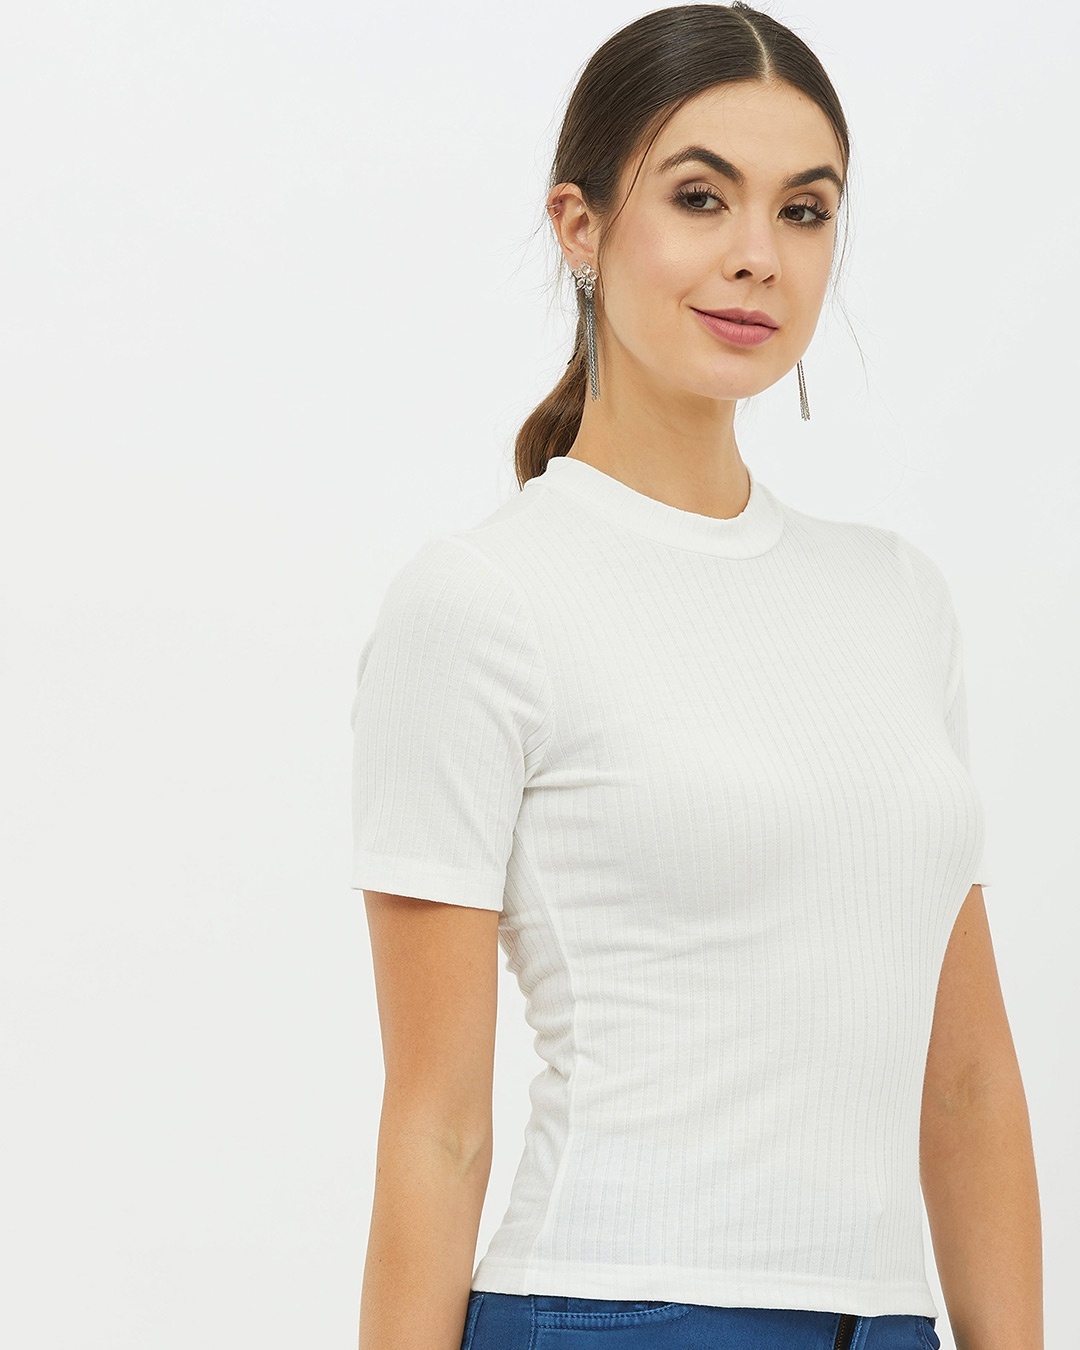 Shop Women Round Neck Short Sleeves Solid Top-Design